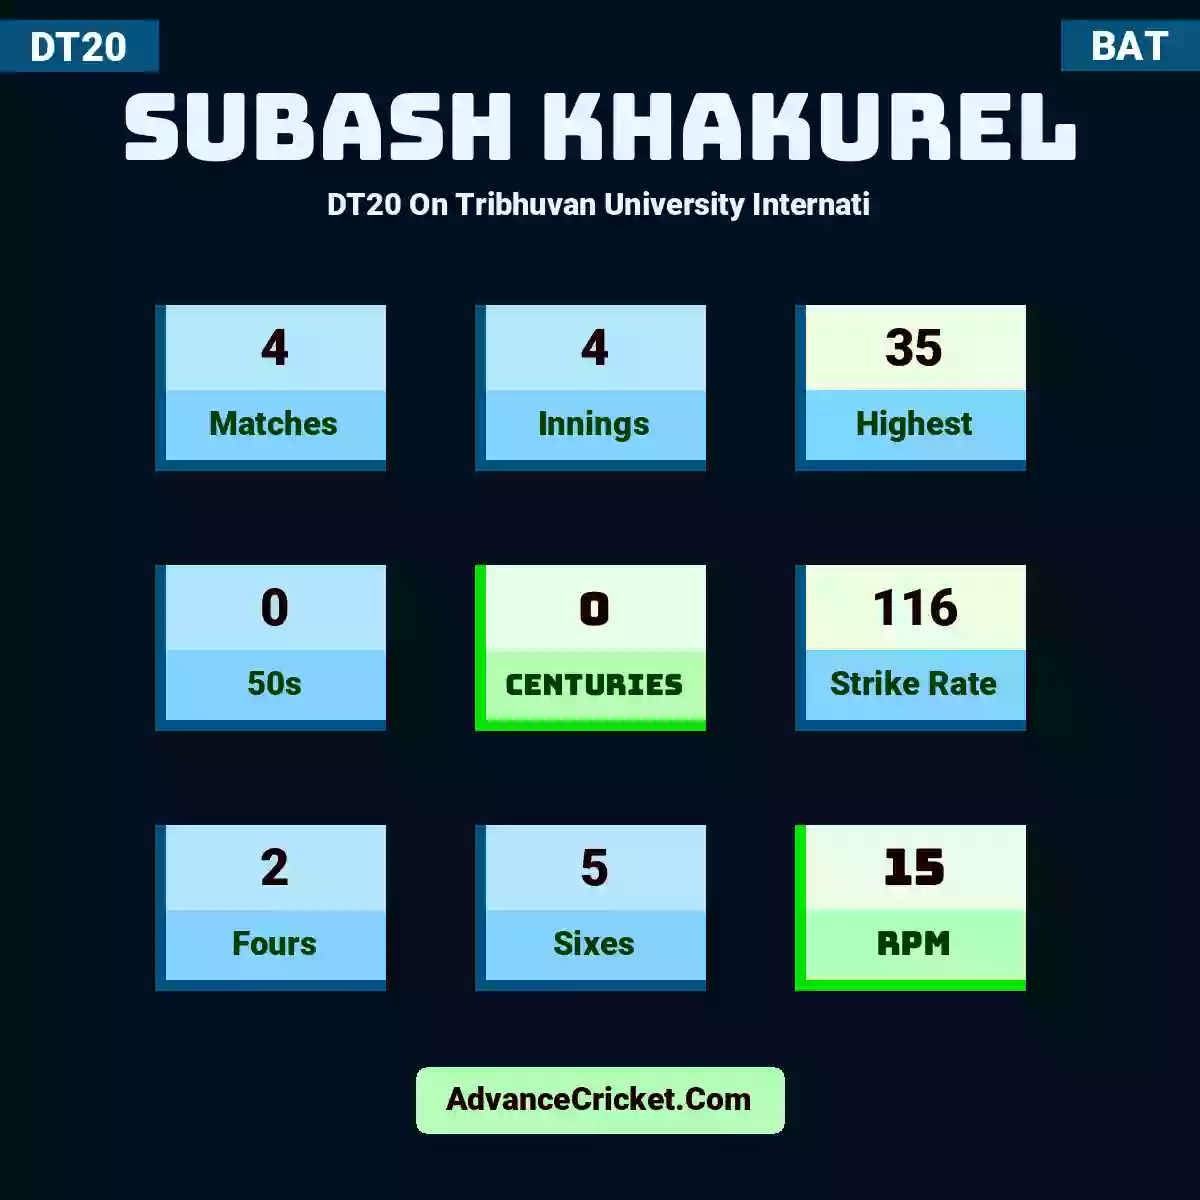 Subash Khakurel DT20  On Tribhuvan University Internati, Subash Khakurel played 4 matches, scored 35 runs as highest, 0 half-centuries, and 0 centuries, with a strike rate of 116. S.Khakurel hit 2 fours and 5 sixes, with an RPM of 15.